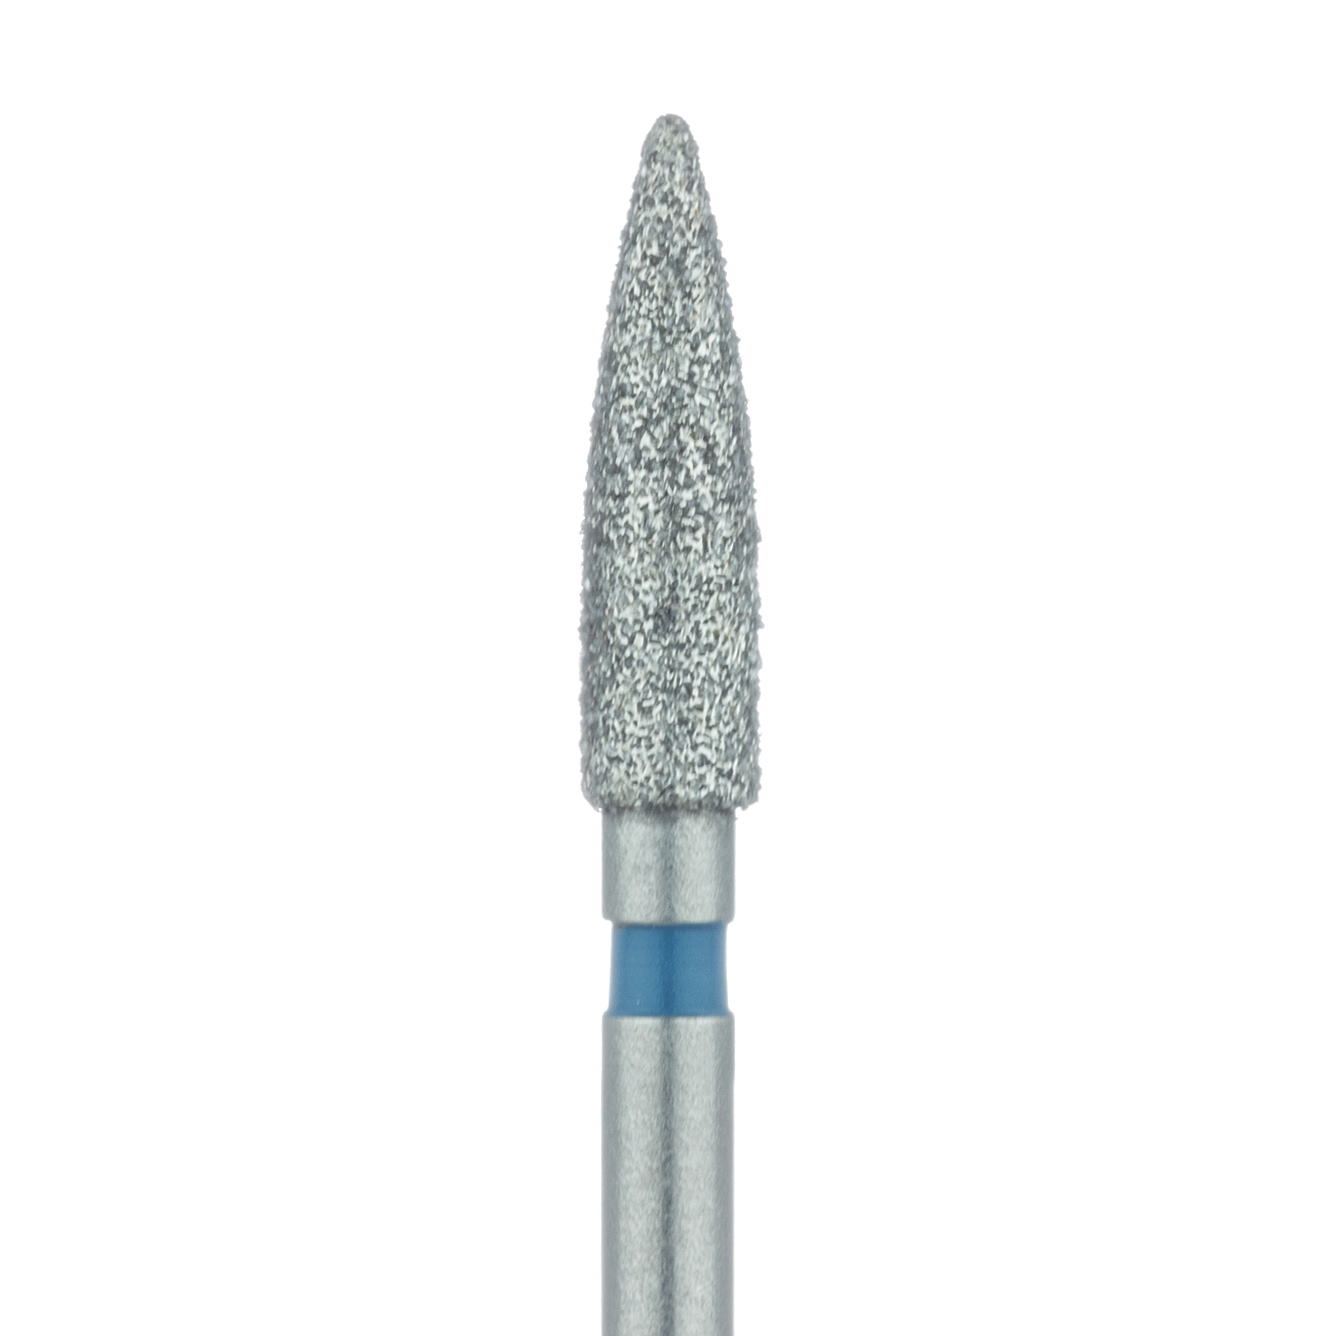 862-021-FG Flame Diamond Bur, 2.1mm Ø, Medium, FG